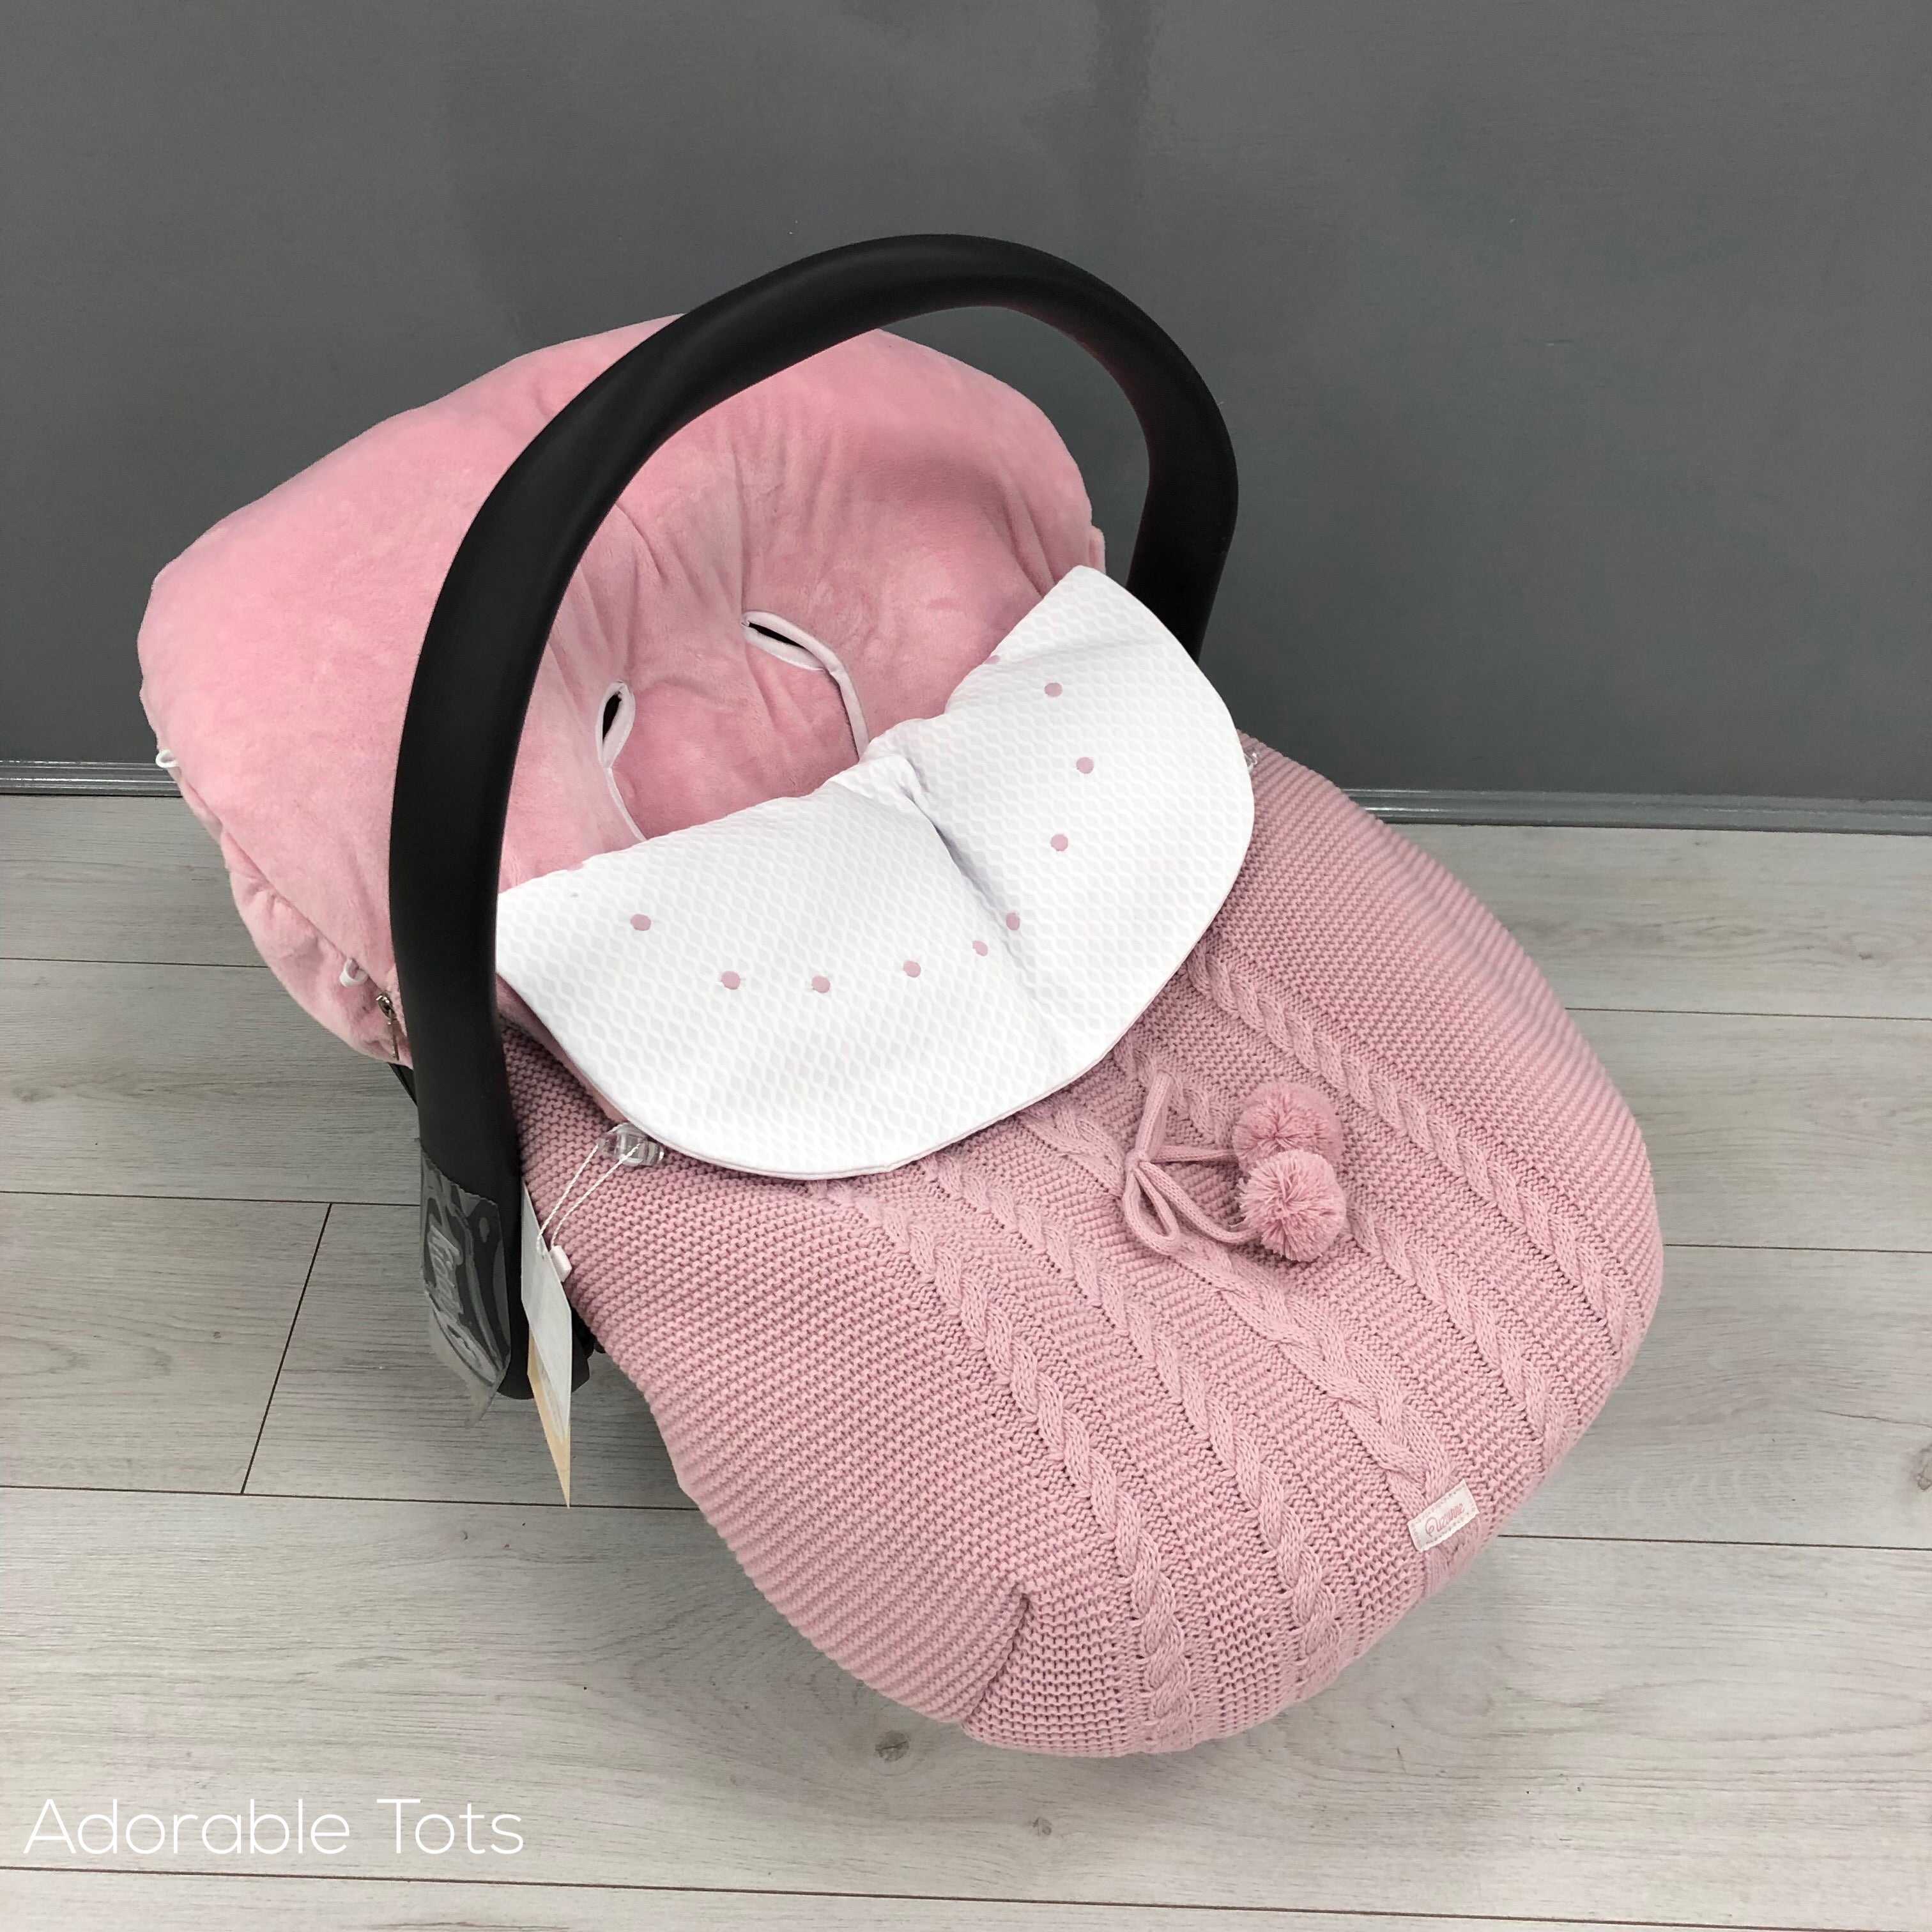 Adorable Tots Universal Infant Carrier Footmuff - Pink